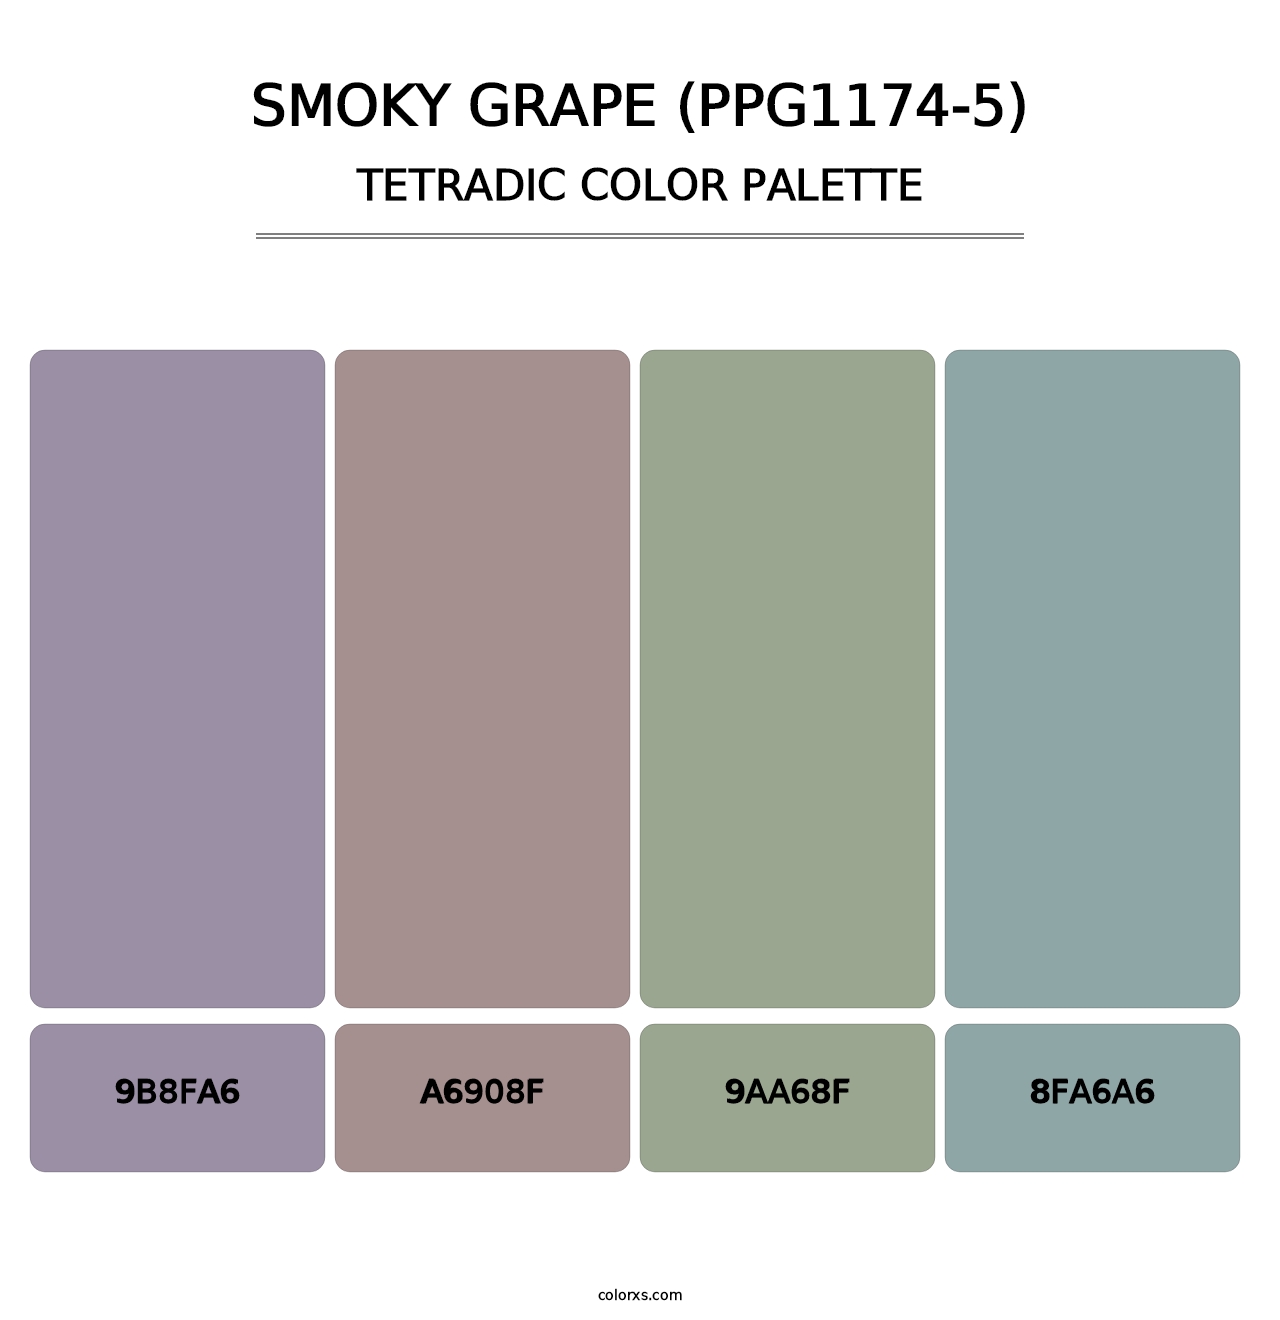 Smoky Grape (PPG1174-5) - Tetradic Color Palette